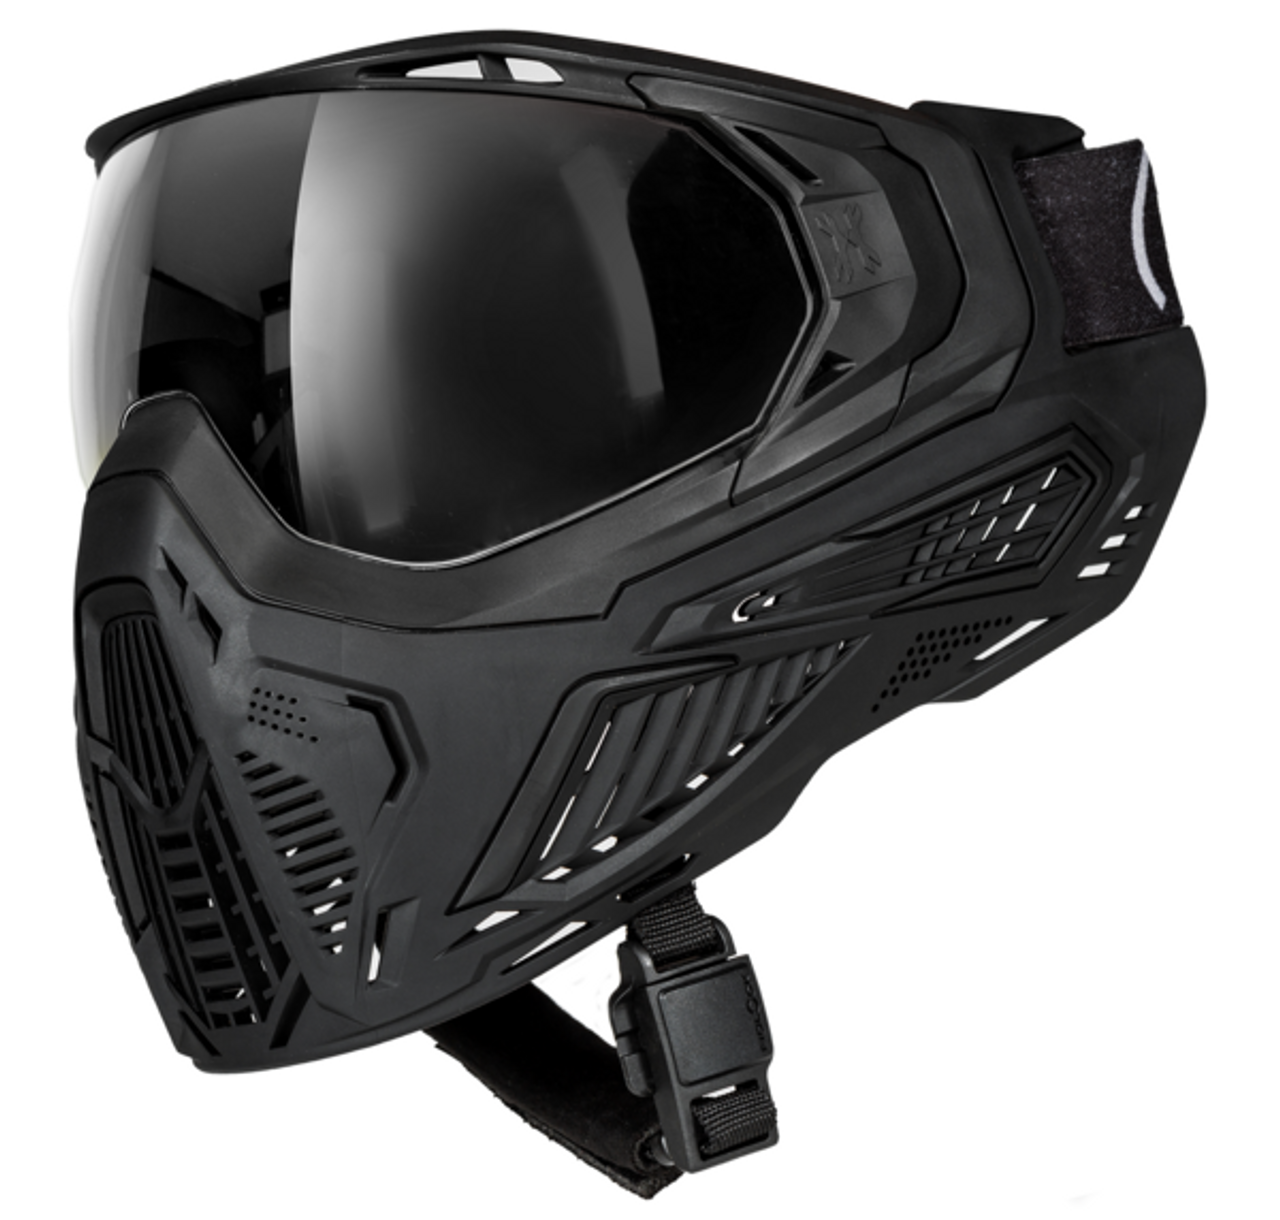 HK Army CTX Paintball Mask Goggle Strap Headpad - Black / Grey, Goggles -   Canada